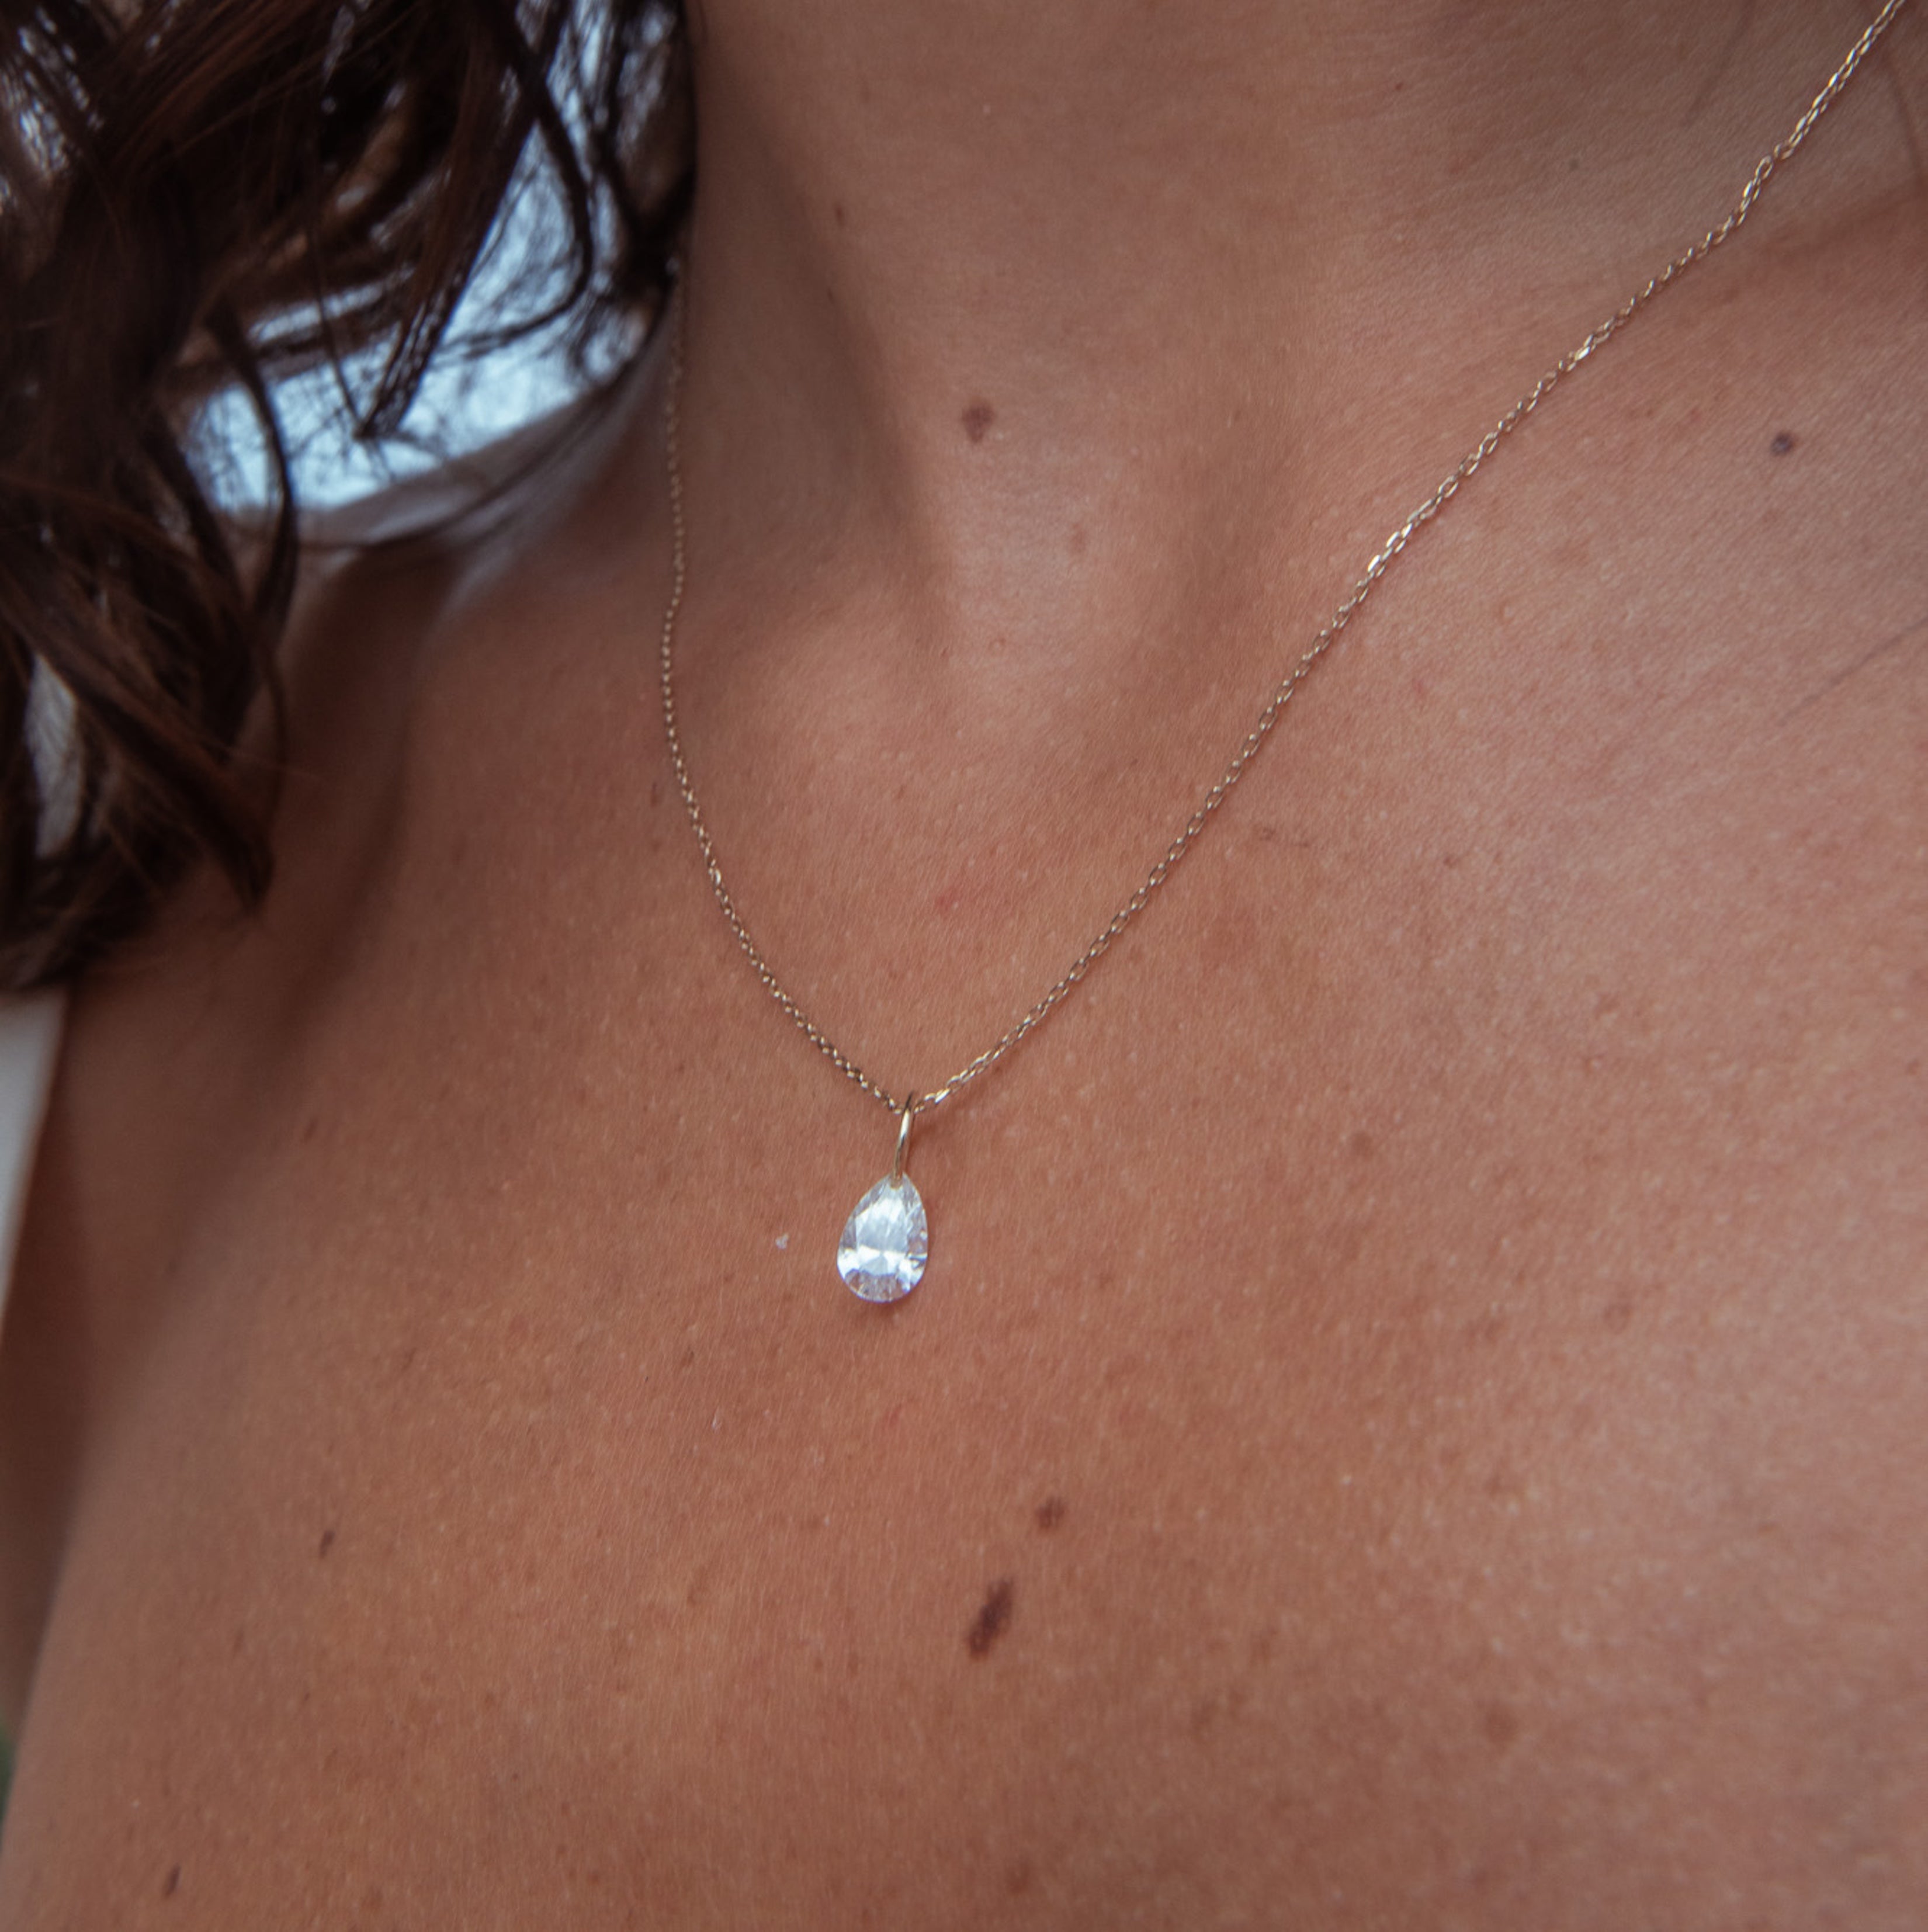 XL Pear Pierced Diamond Charm + Free Chain Necklace